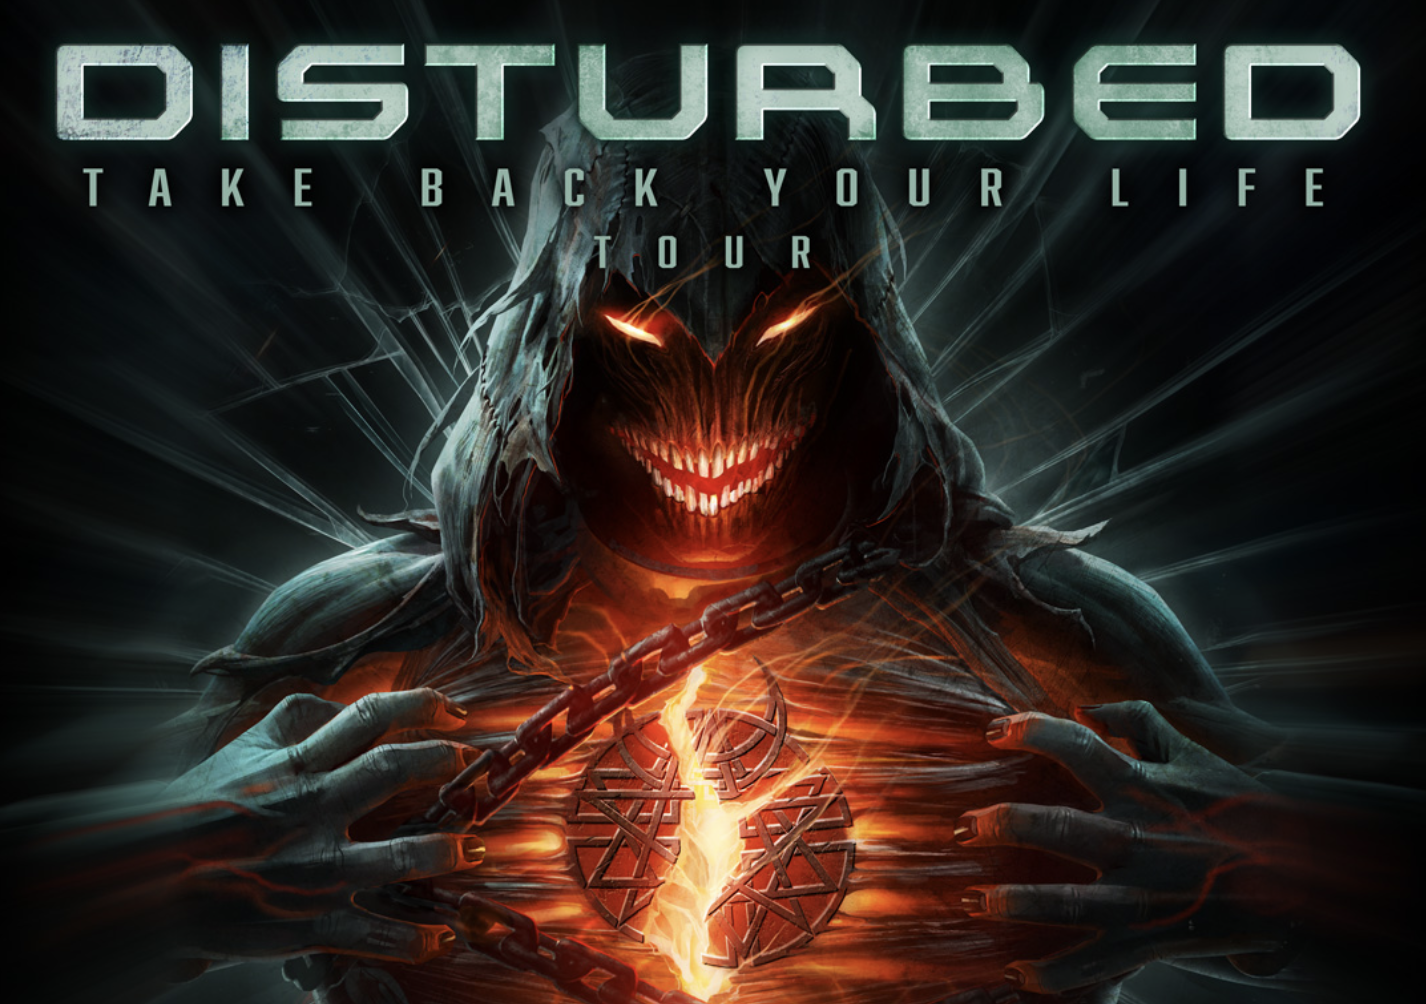 Disturbed Take Back Your Life Tour artwork